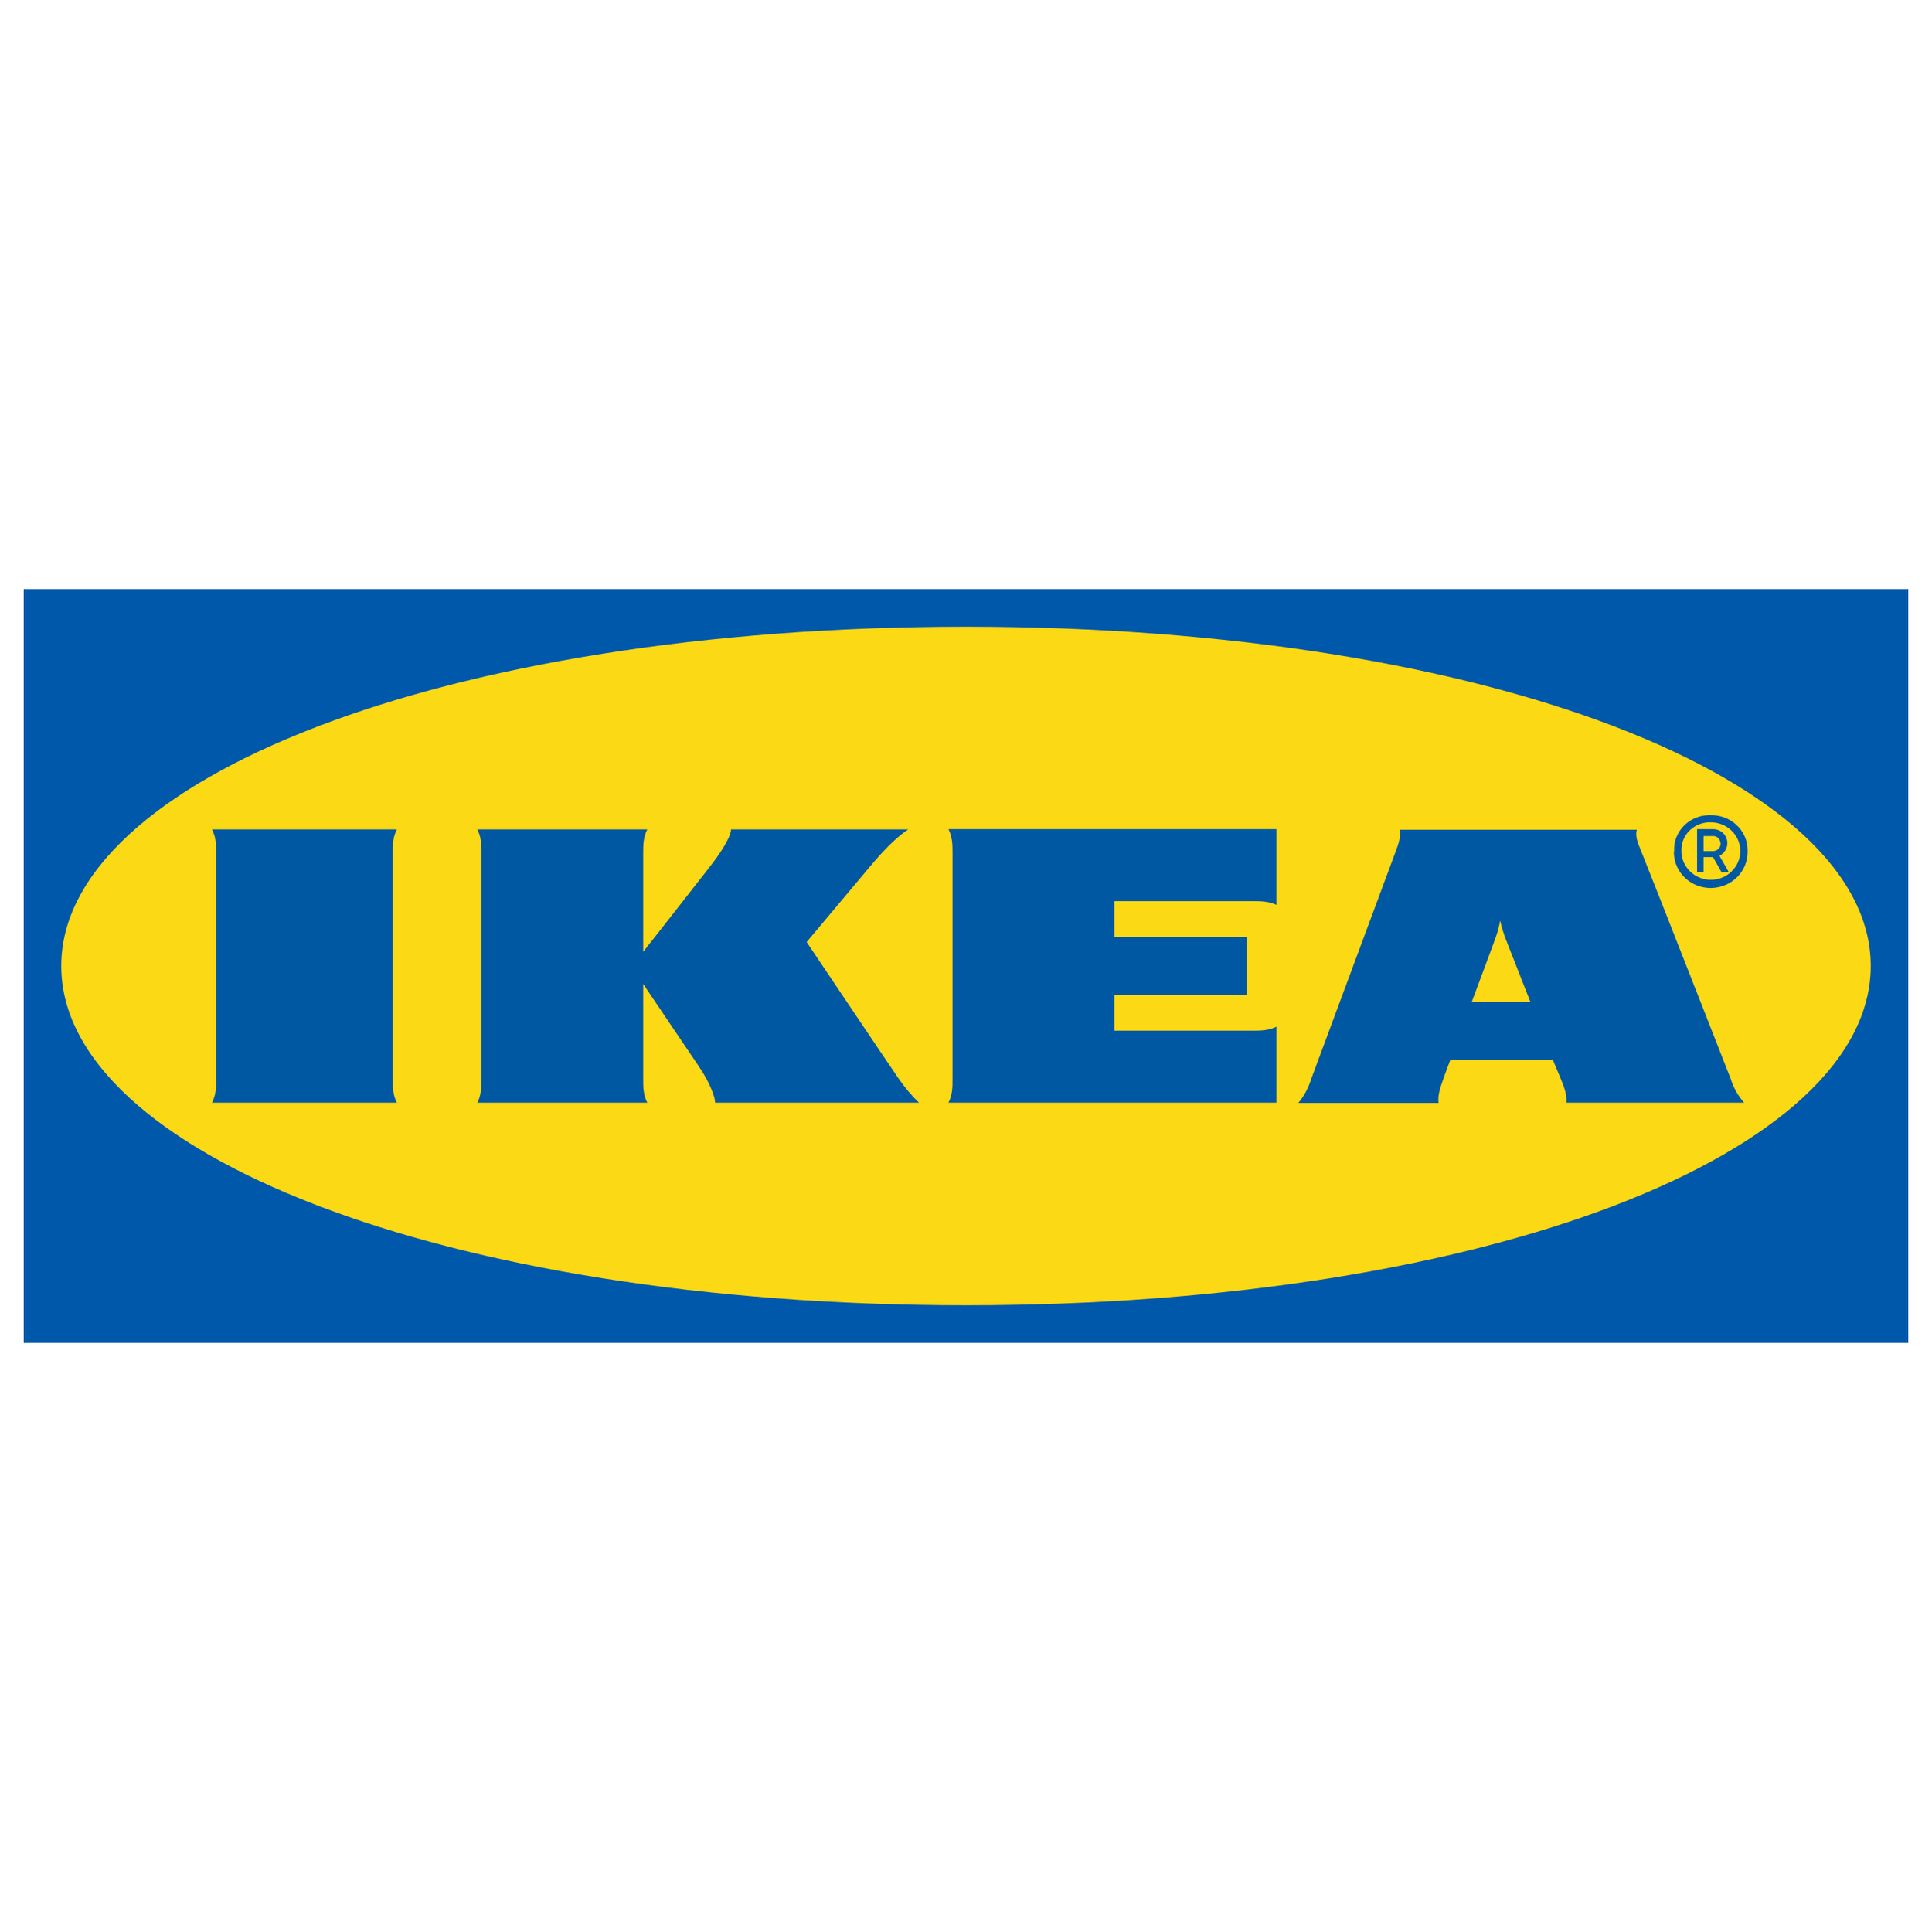 Ikea_logo sq.png